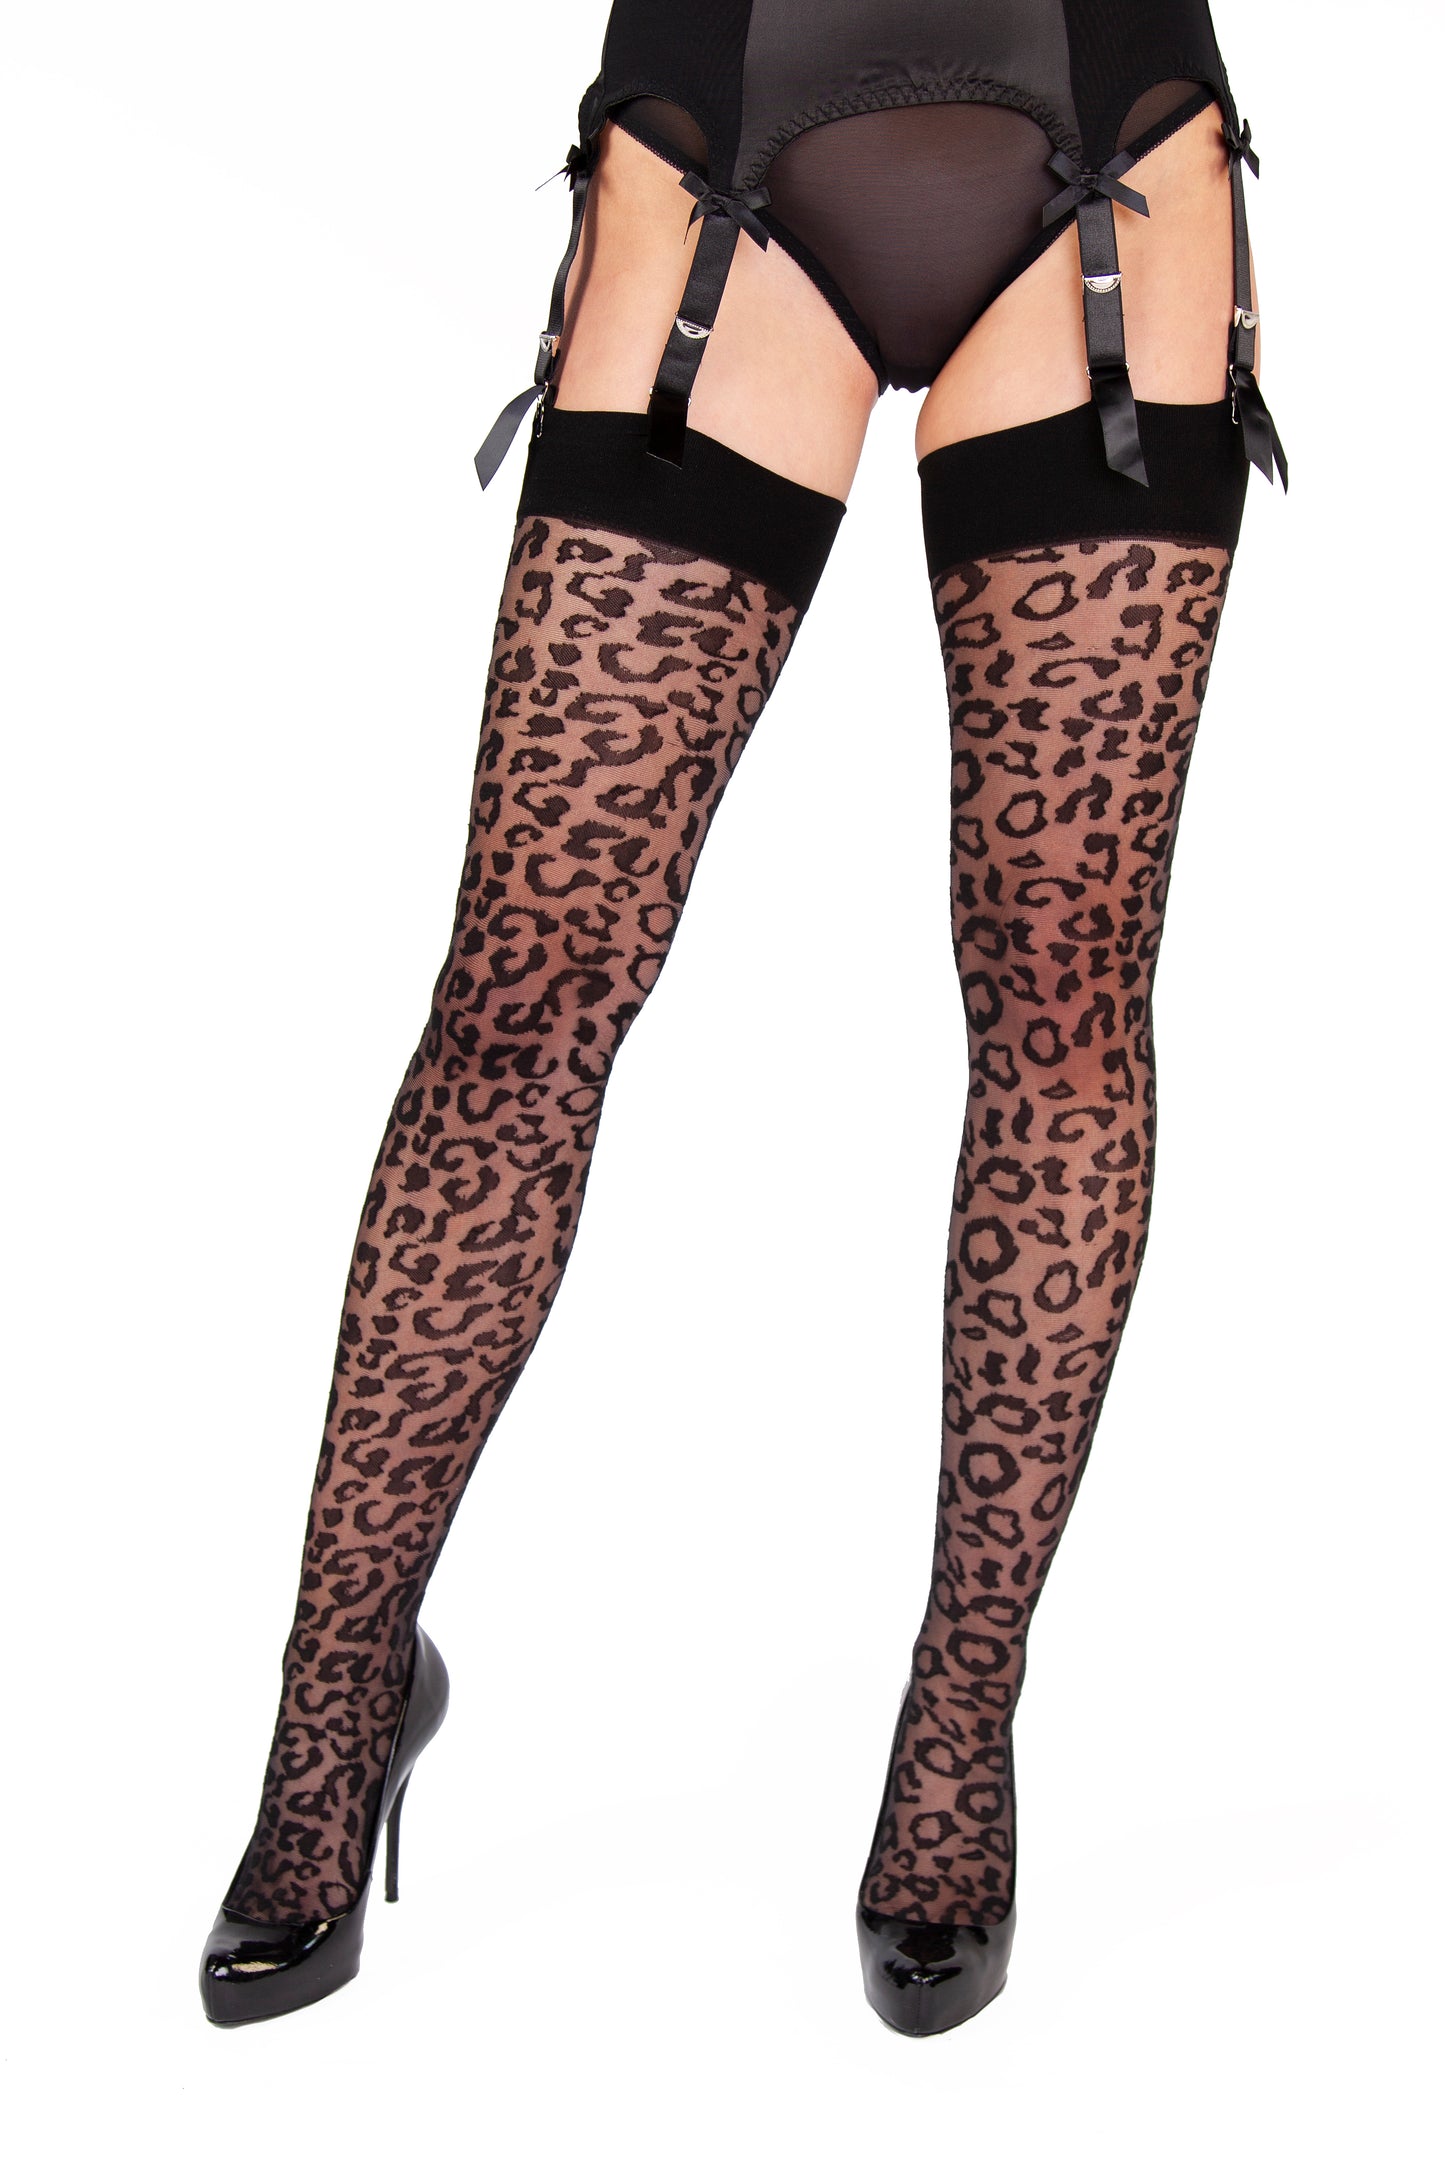 Leopard Stockings - Size 4-18